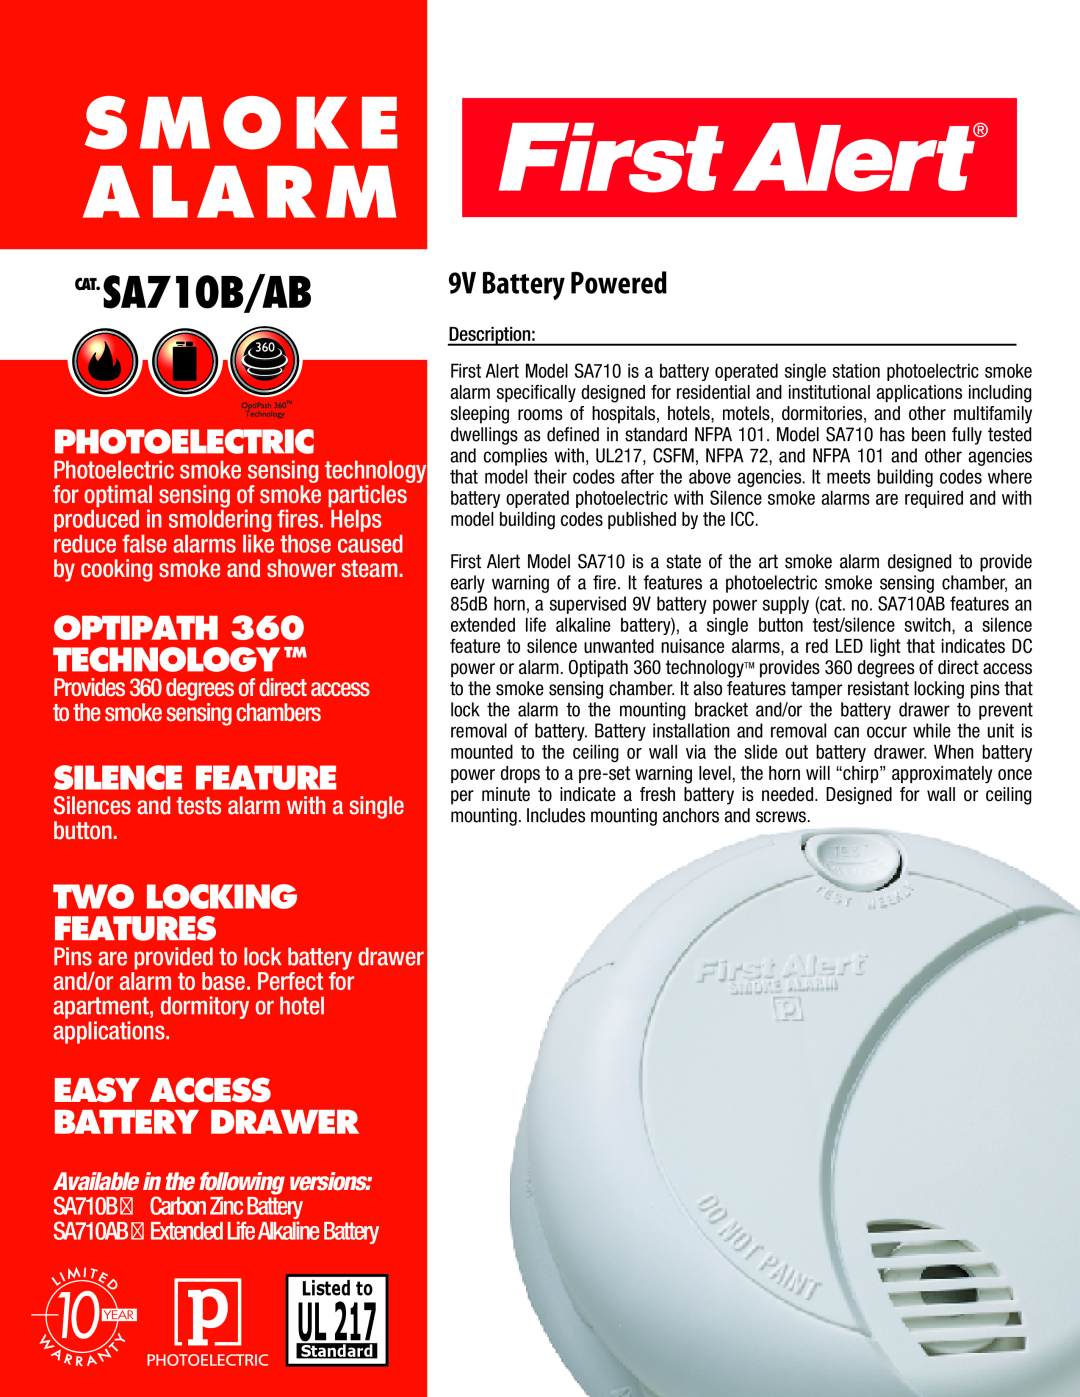 First Alert manual CAT.SA710B/AB, SA710AB, Description, Smoke Alarm, Photoelectric, Optipath Technologytm, UL217 